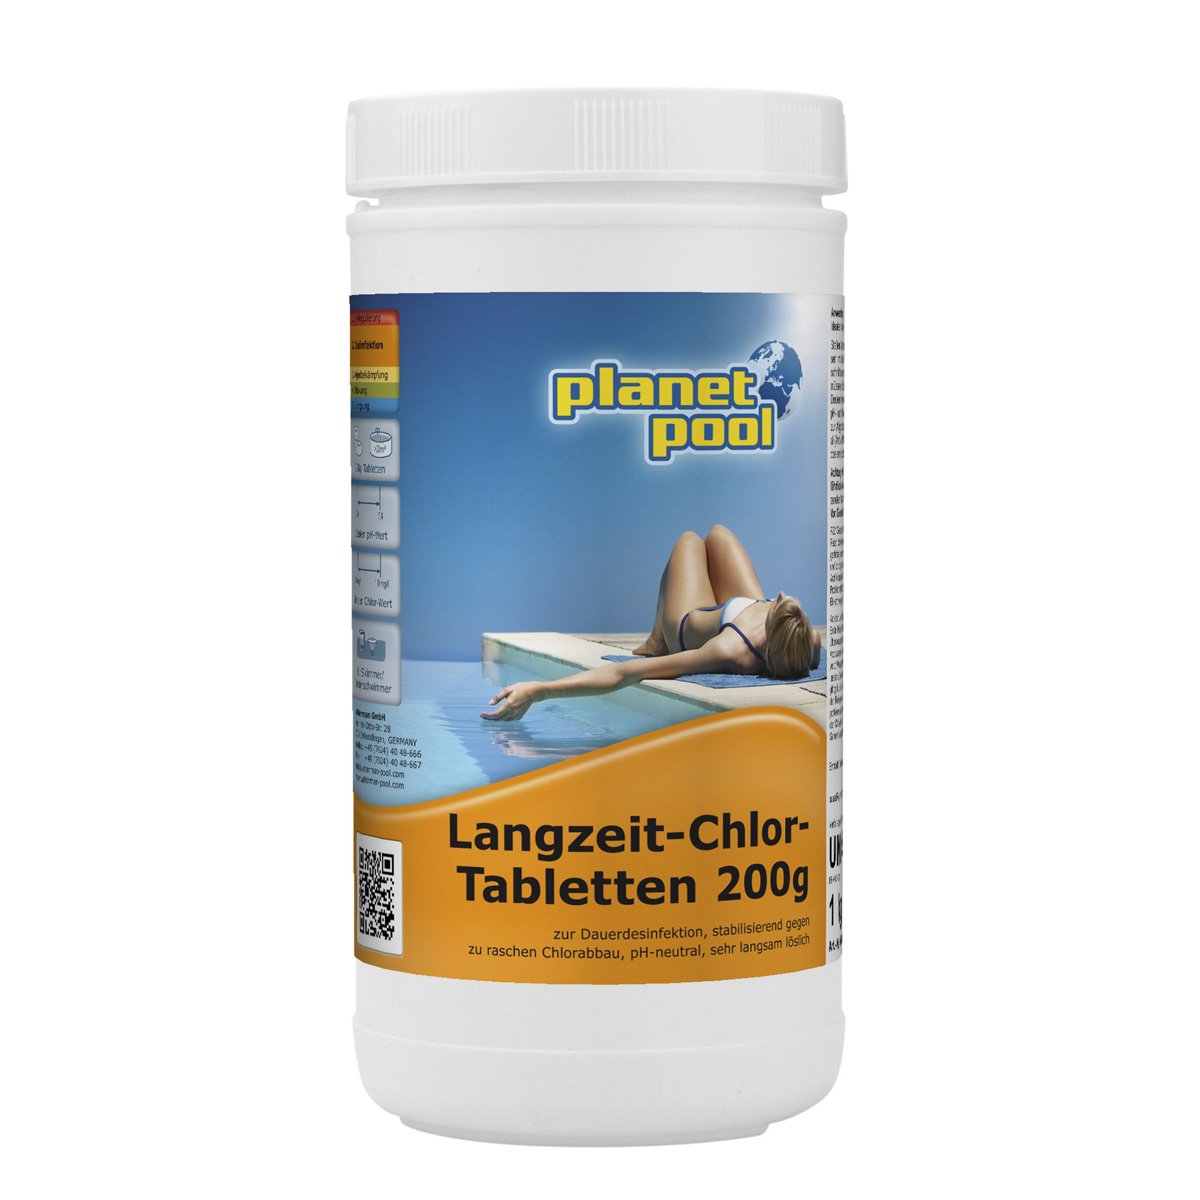 PLANET POOL Langzeit-Chlor-Tabletten 200g 1 kg